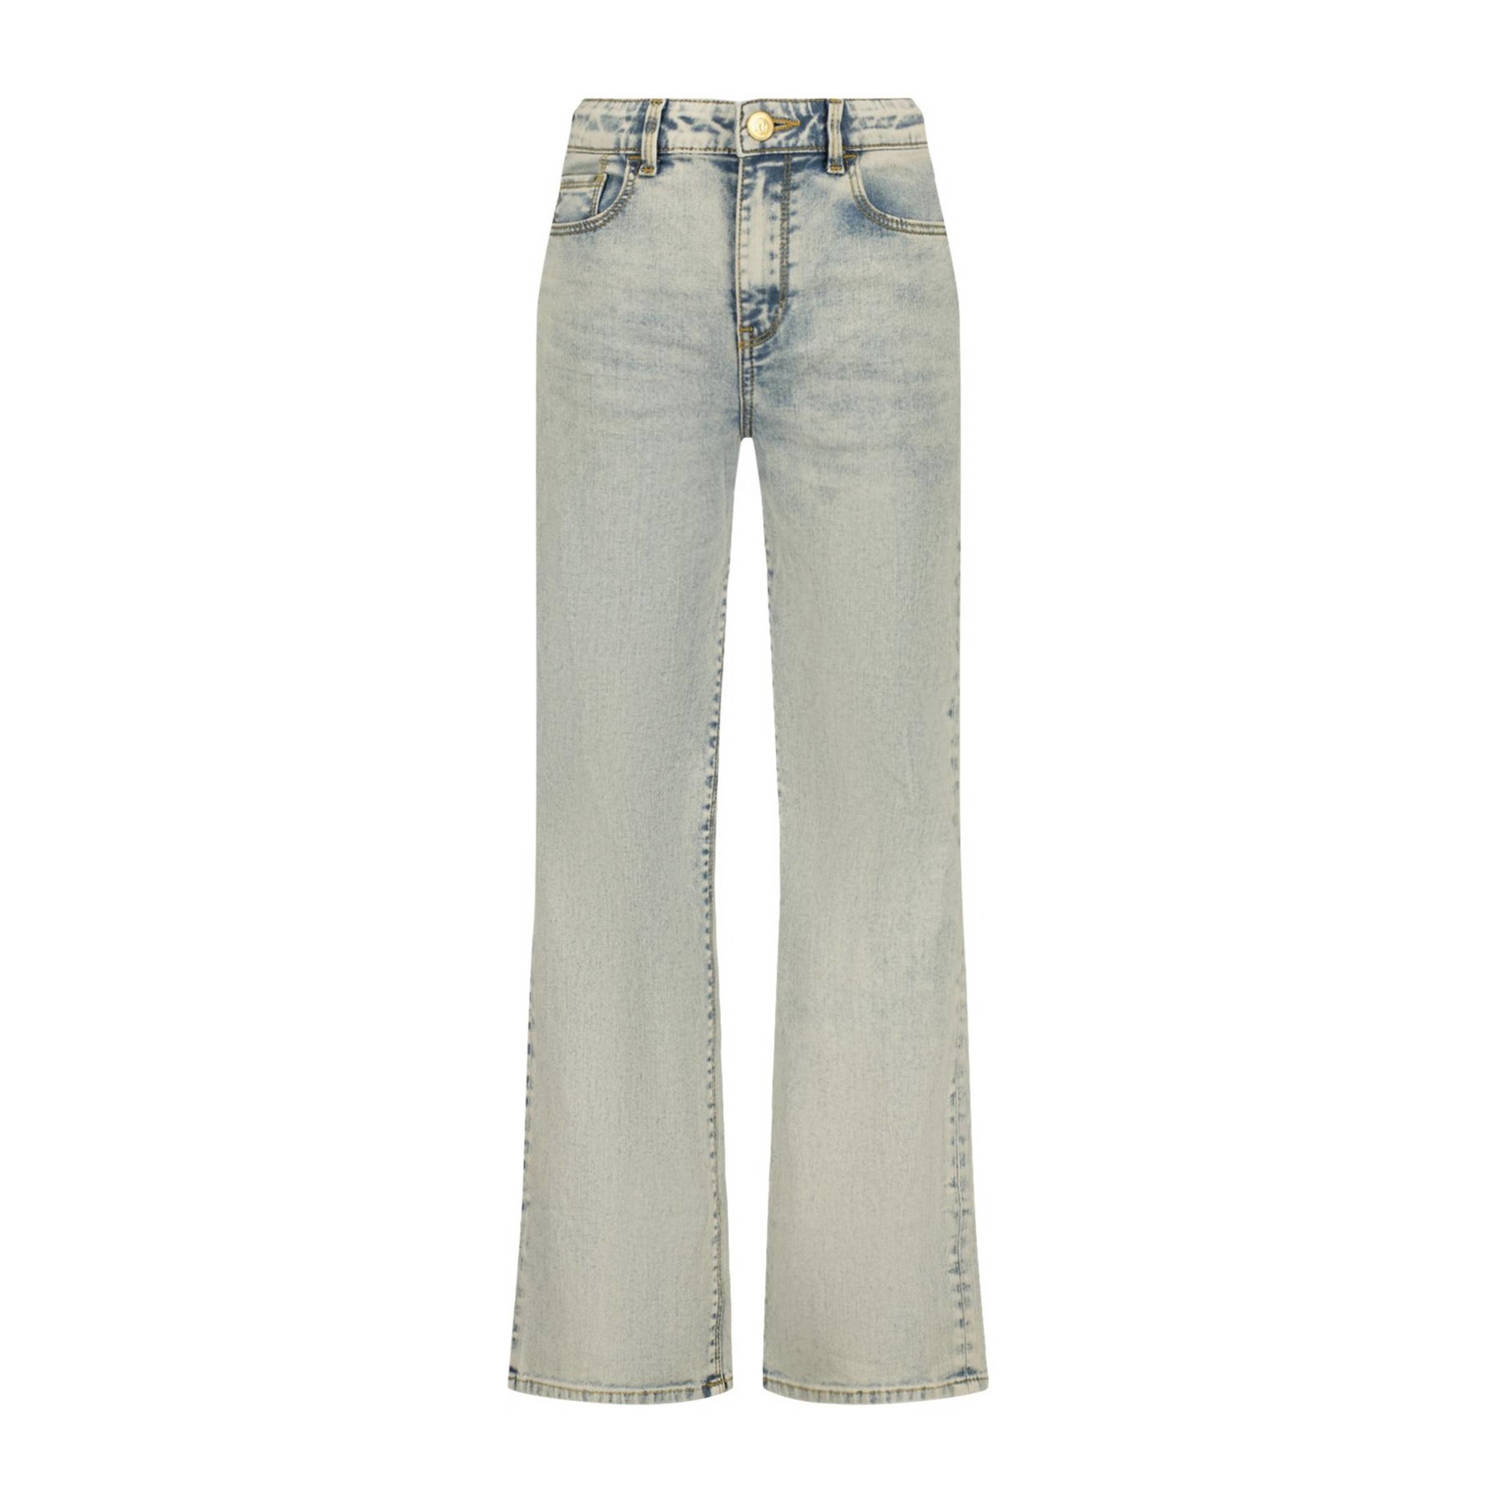 Raizzed wide leg jeans Mississippi light blue stone Blauw Meisjes Stretchdenim 158